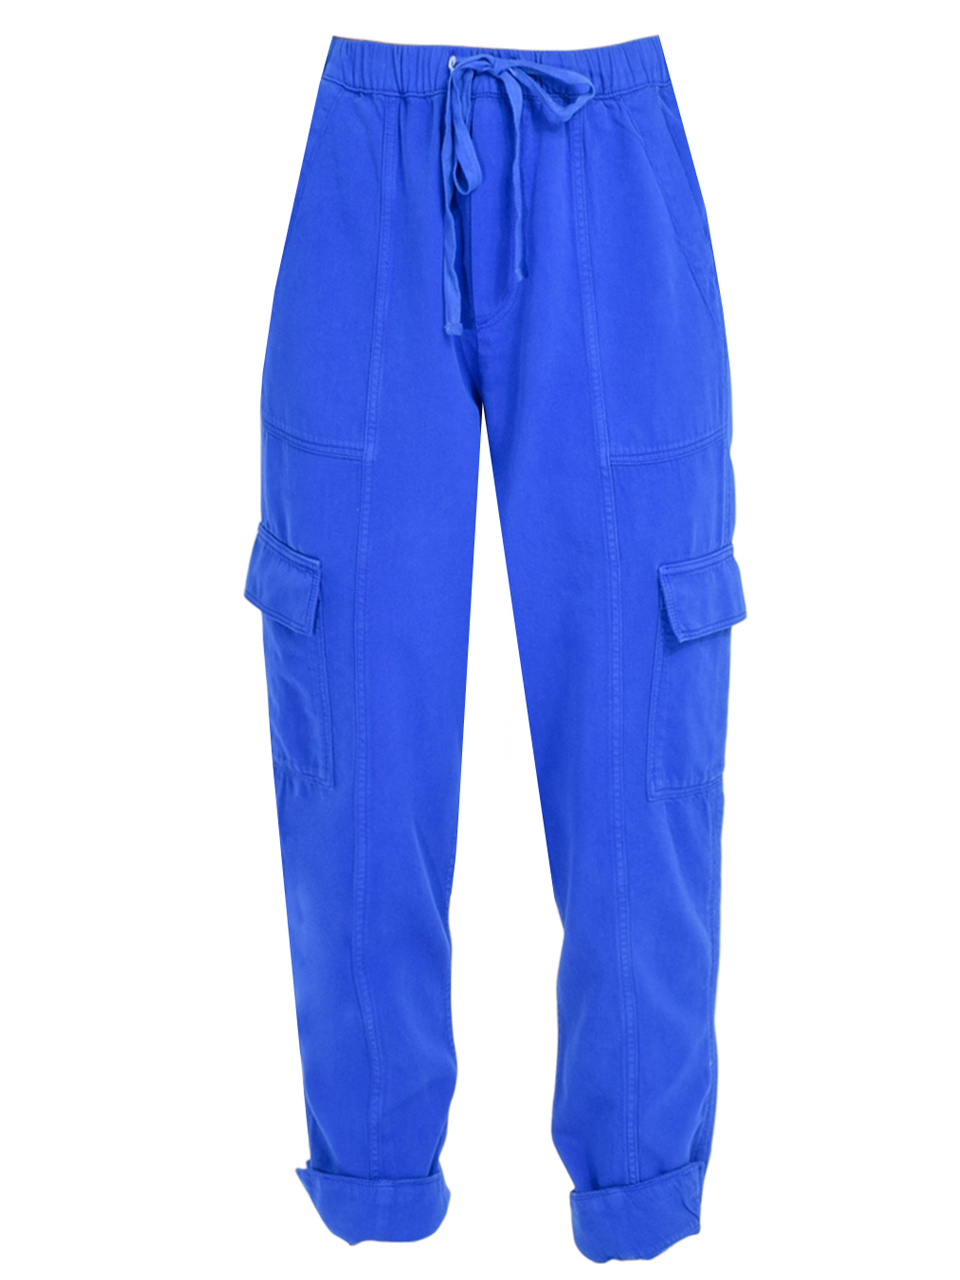 BELLEROSE Kunz Trouser in Lazuli Blue Product Shot 